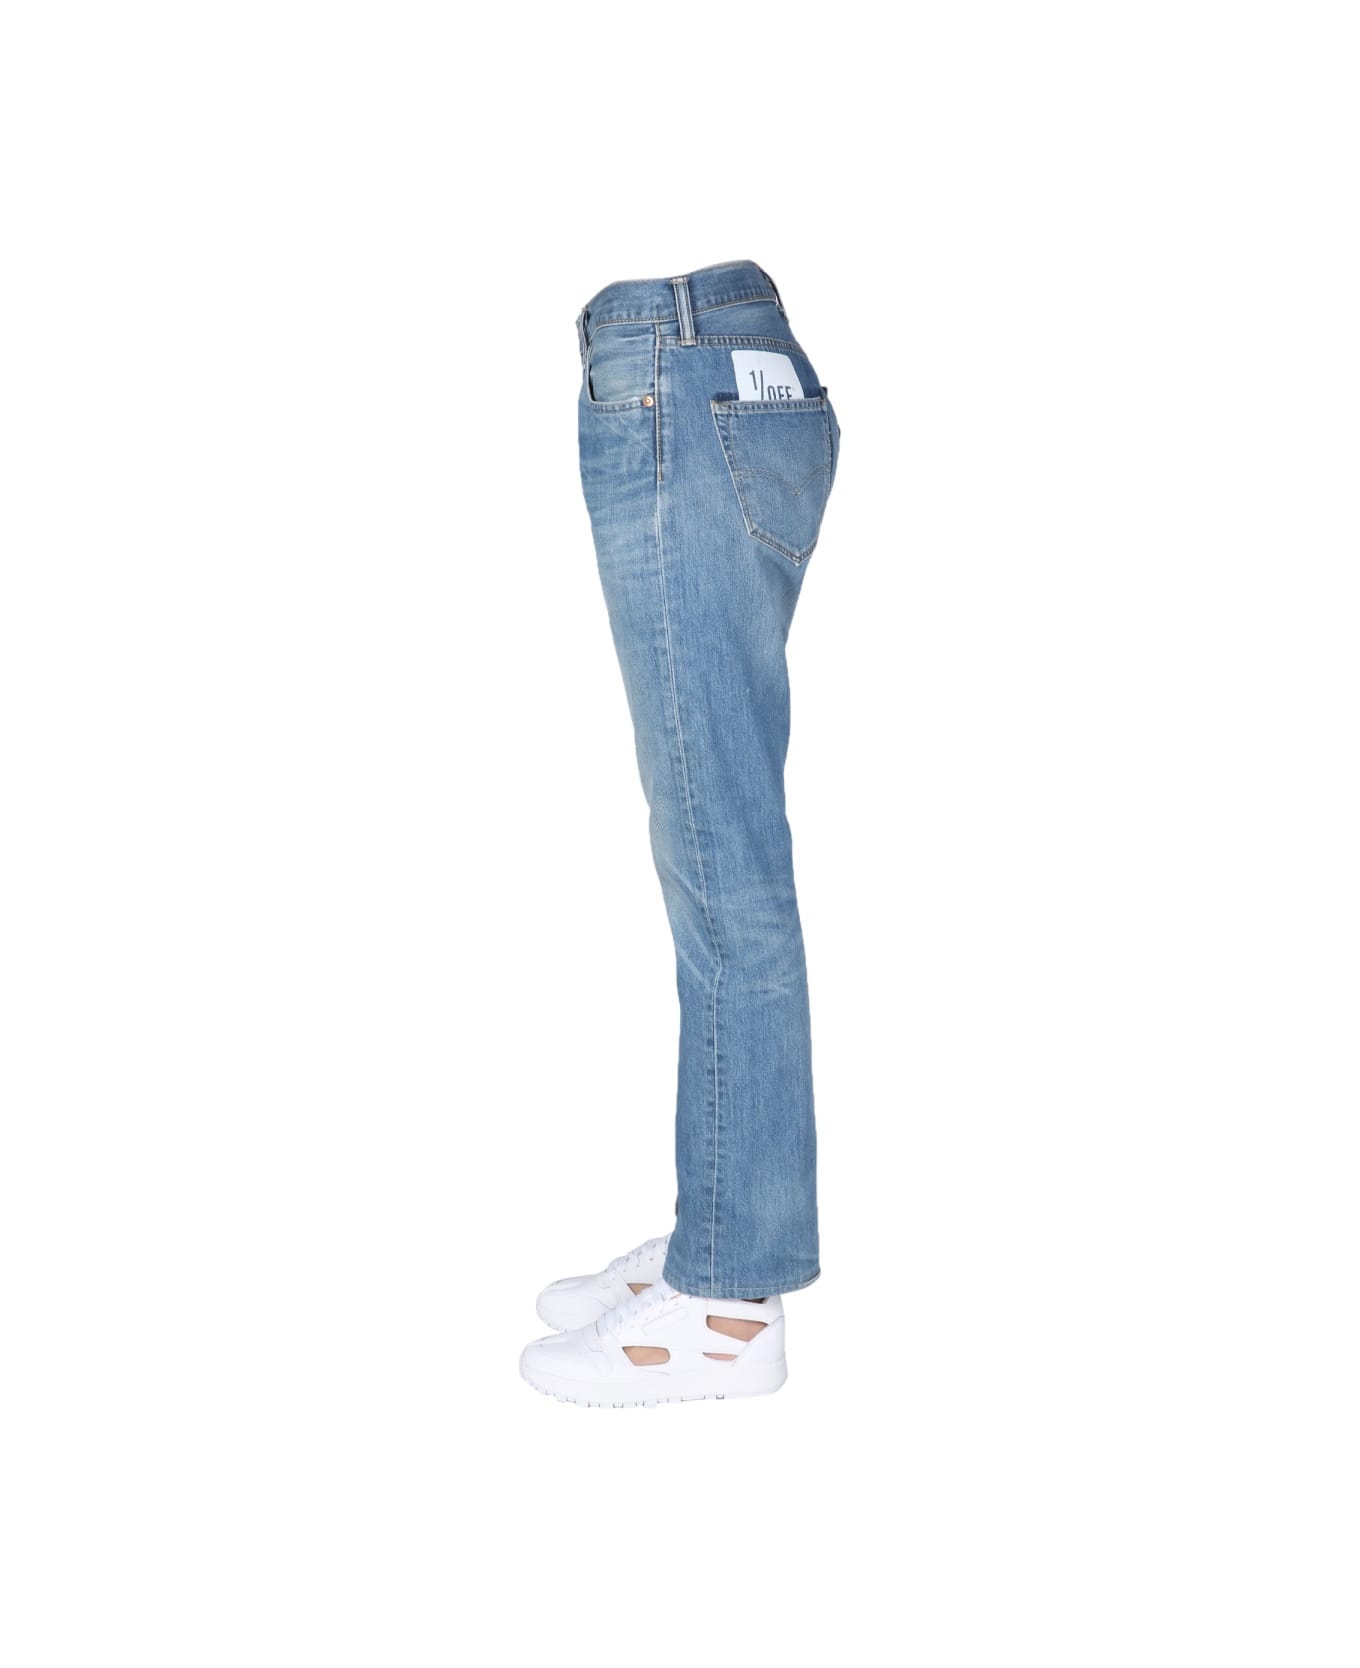 1/OFF 50/50 Jeans - MULTICOLOUR